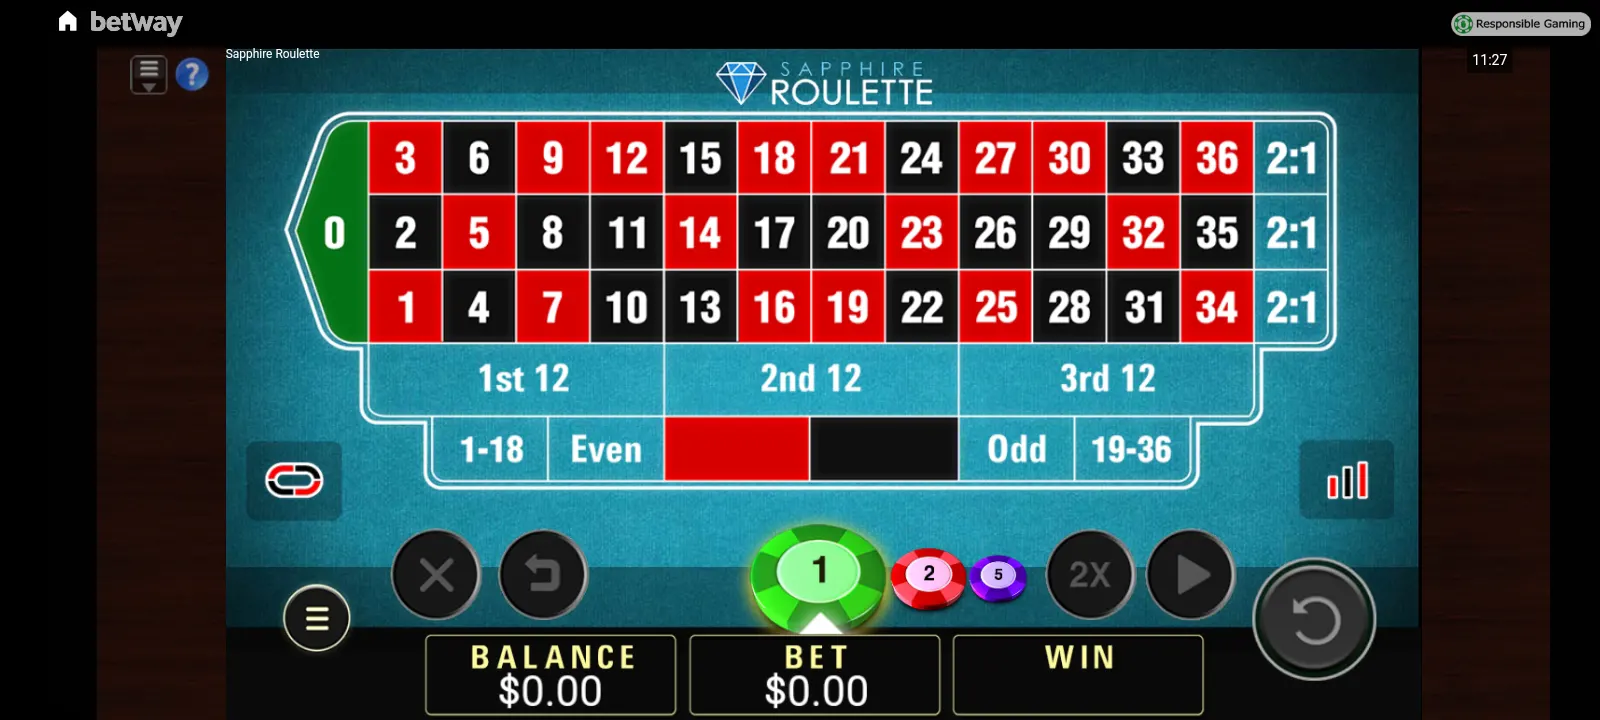 Betway casino app screenshot 2